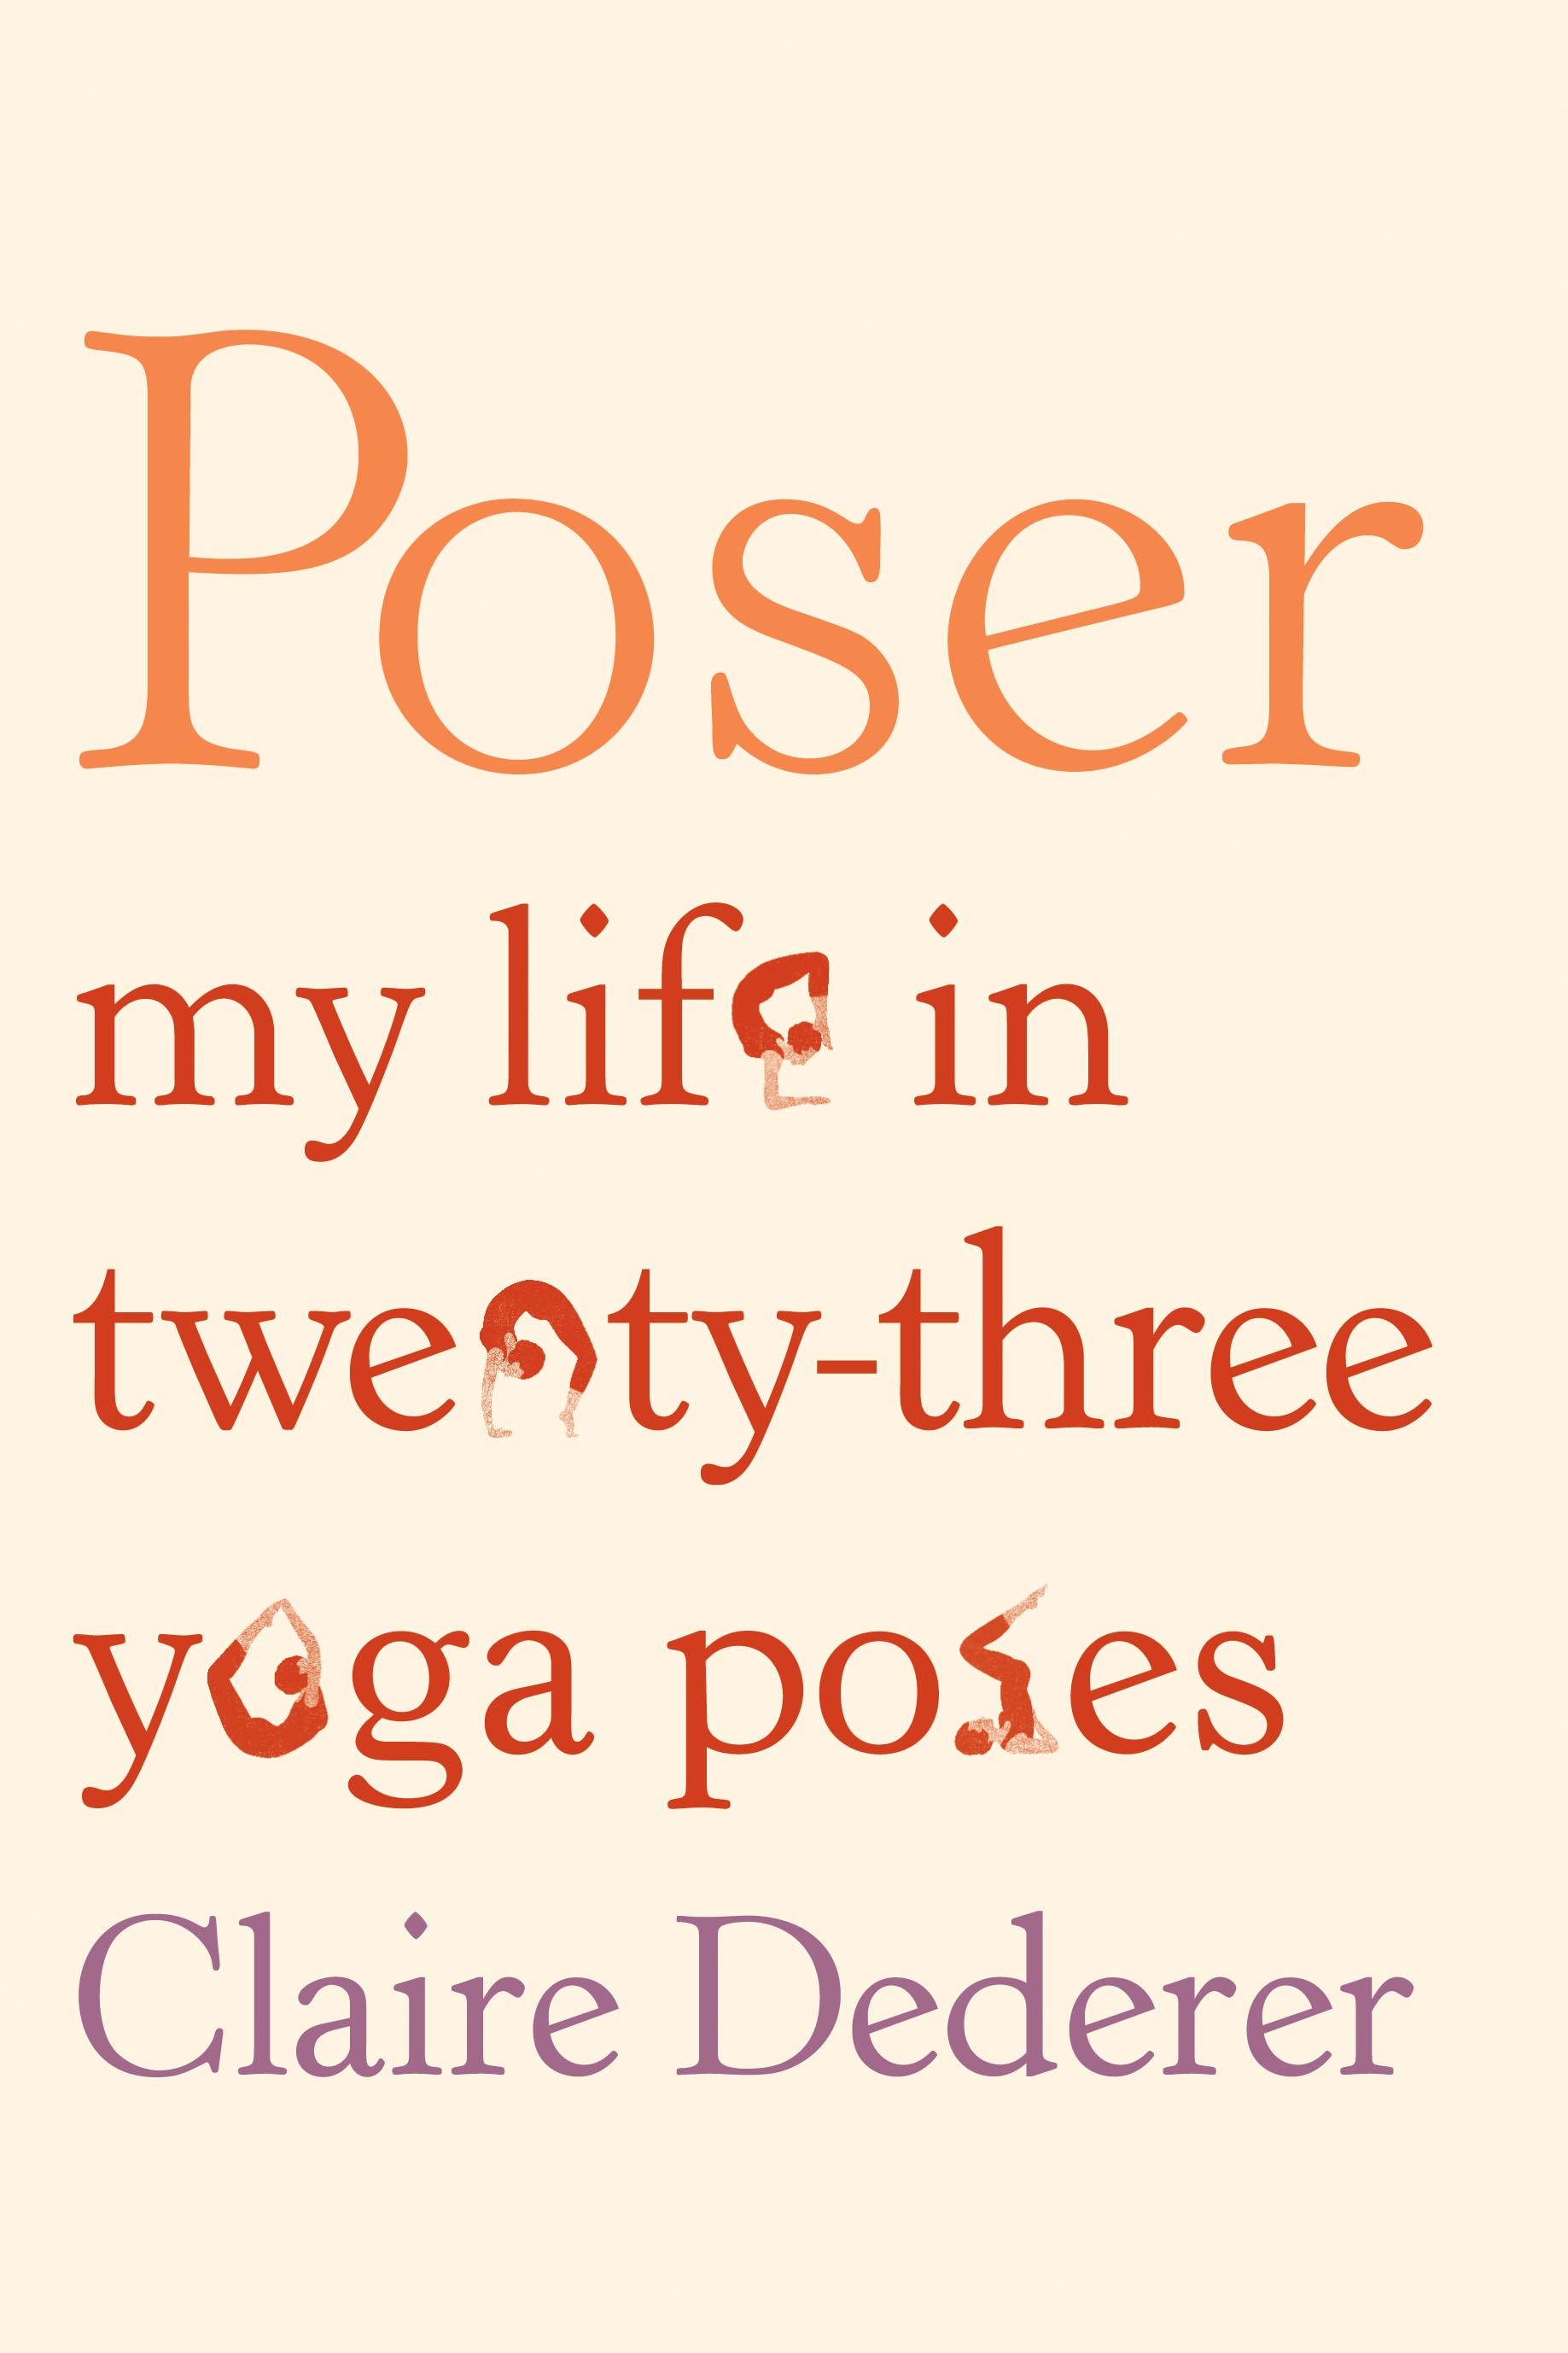 CultureZohn:   Poses Zohn  Twenty in My Three pose yoga Yoga Poser, name and Life Patricia